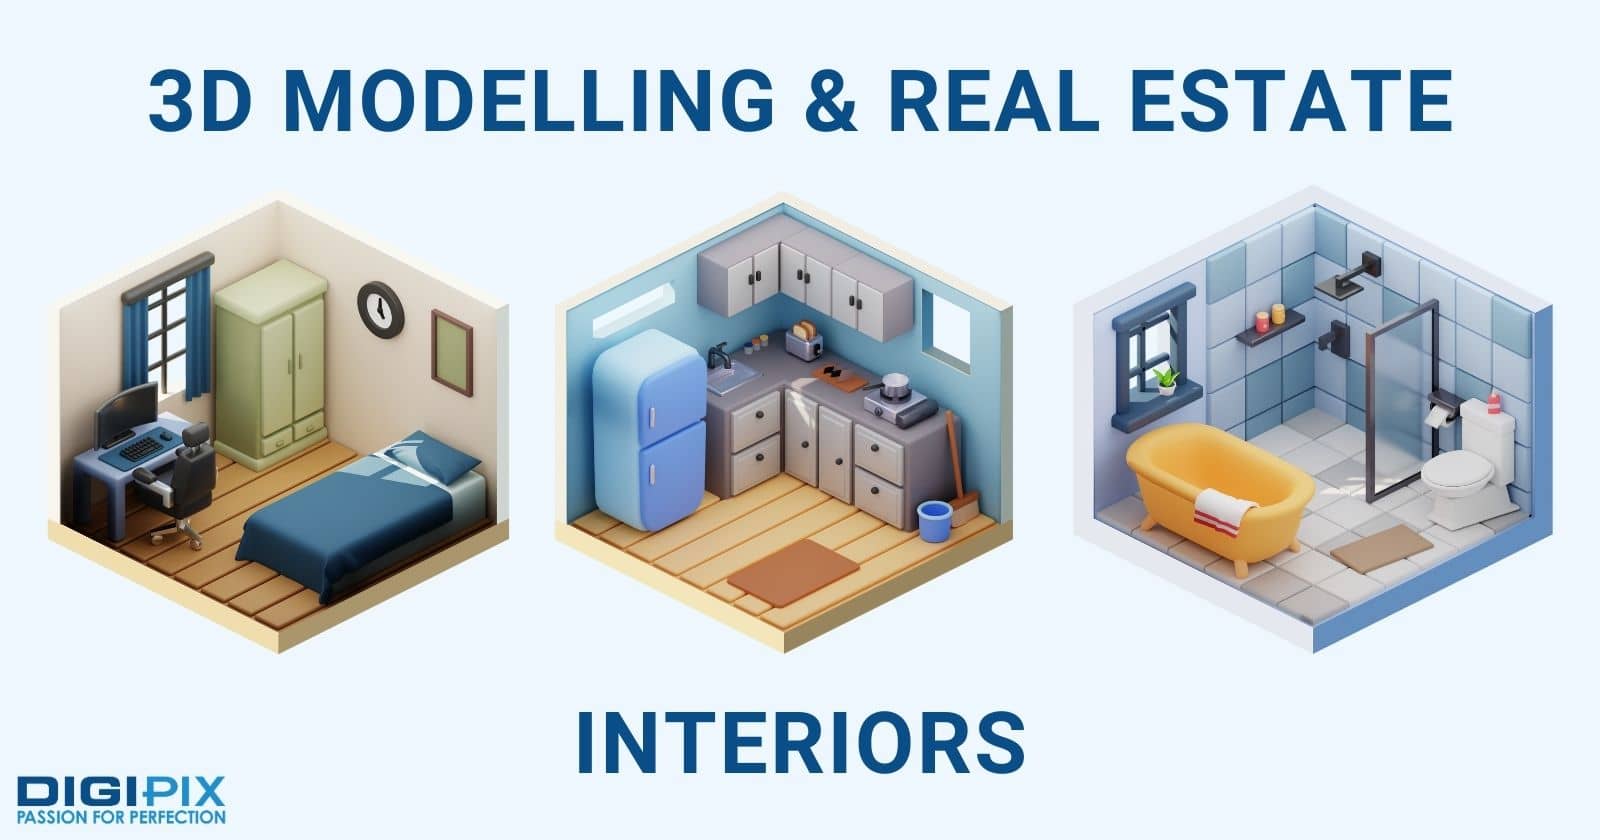 3D Modelling & Reak Estate Interiors digipix digipixinc.com